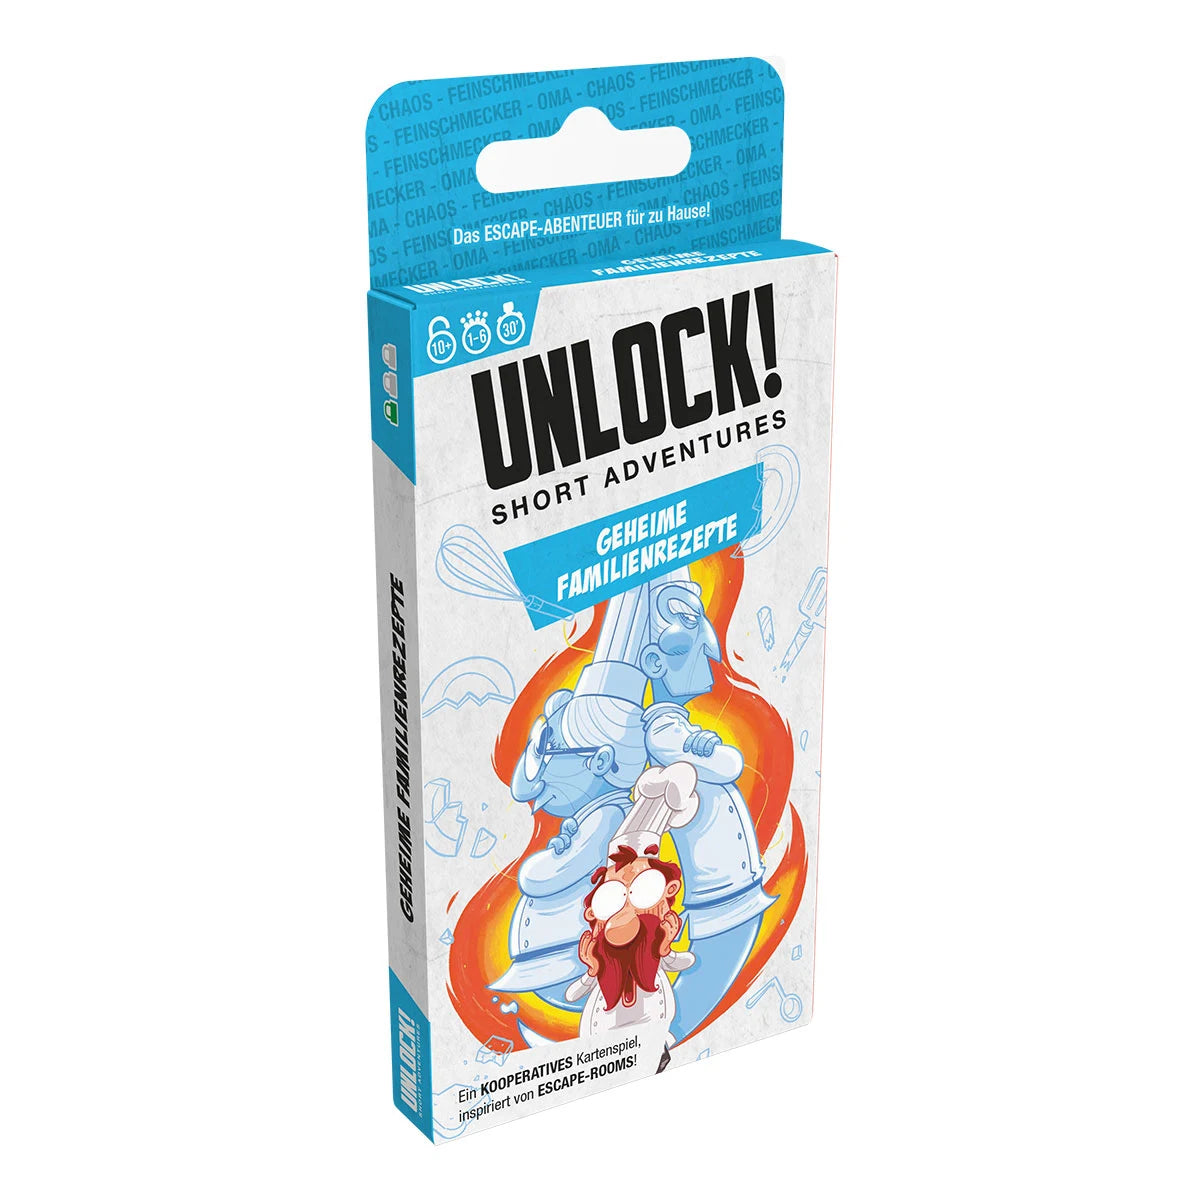 Unlock! - Short Adventures: Geheime Familienrezepte